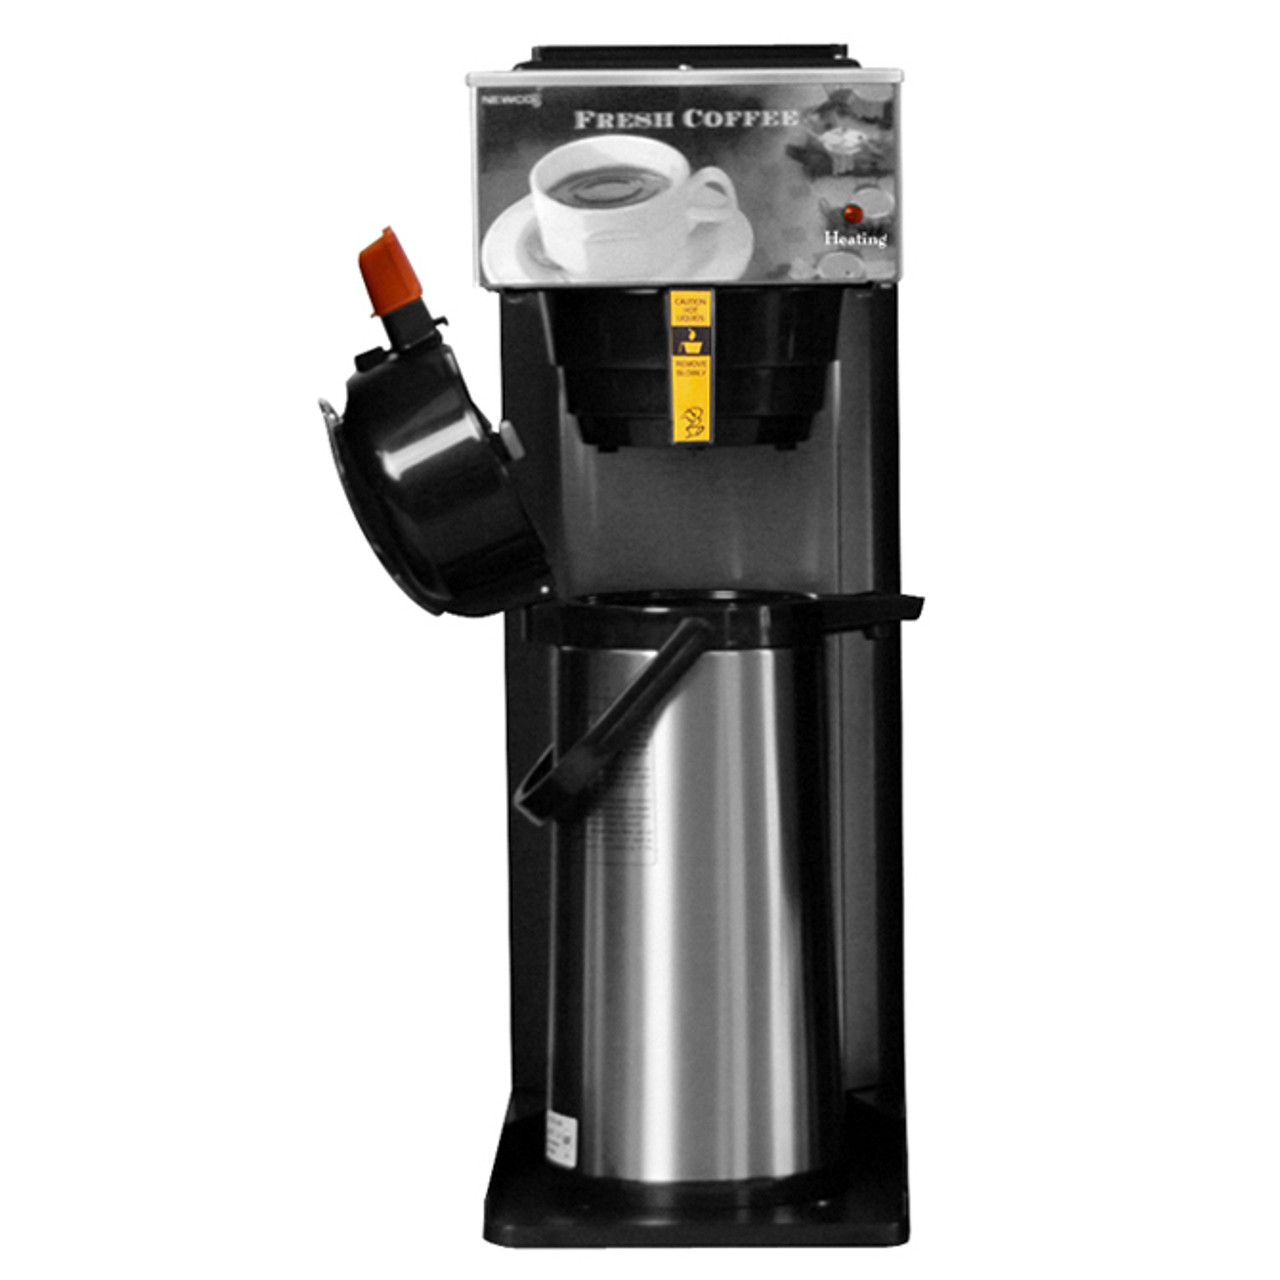 Newco 20:1 AP Thermal Coffee Maker